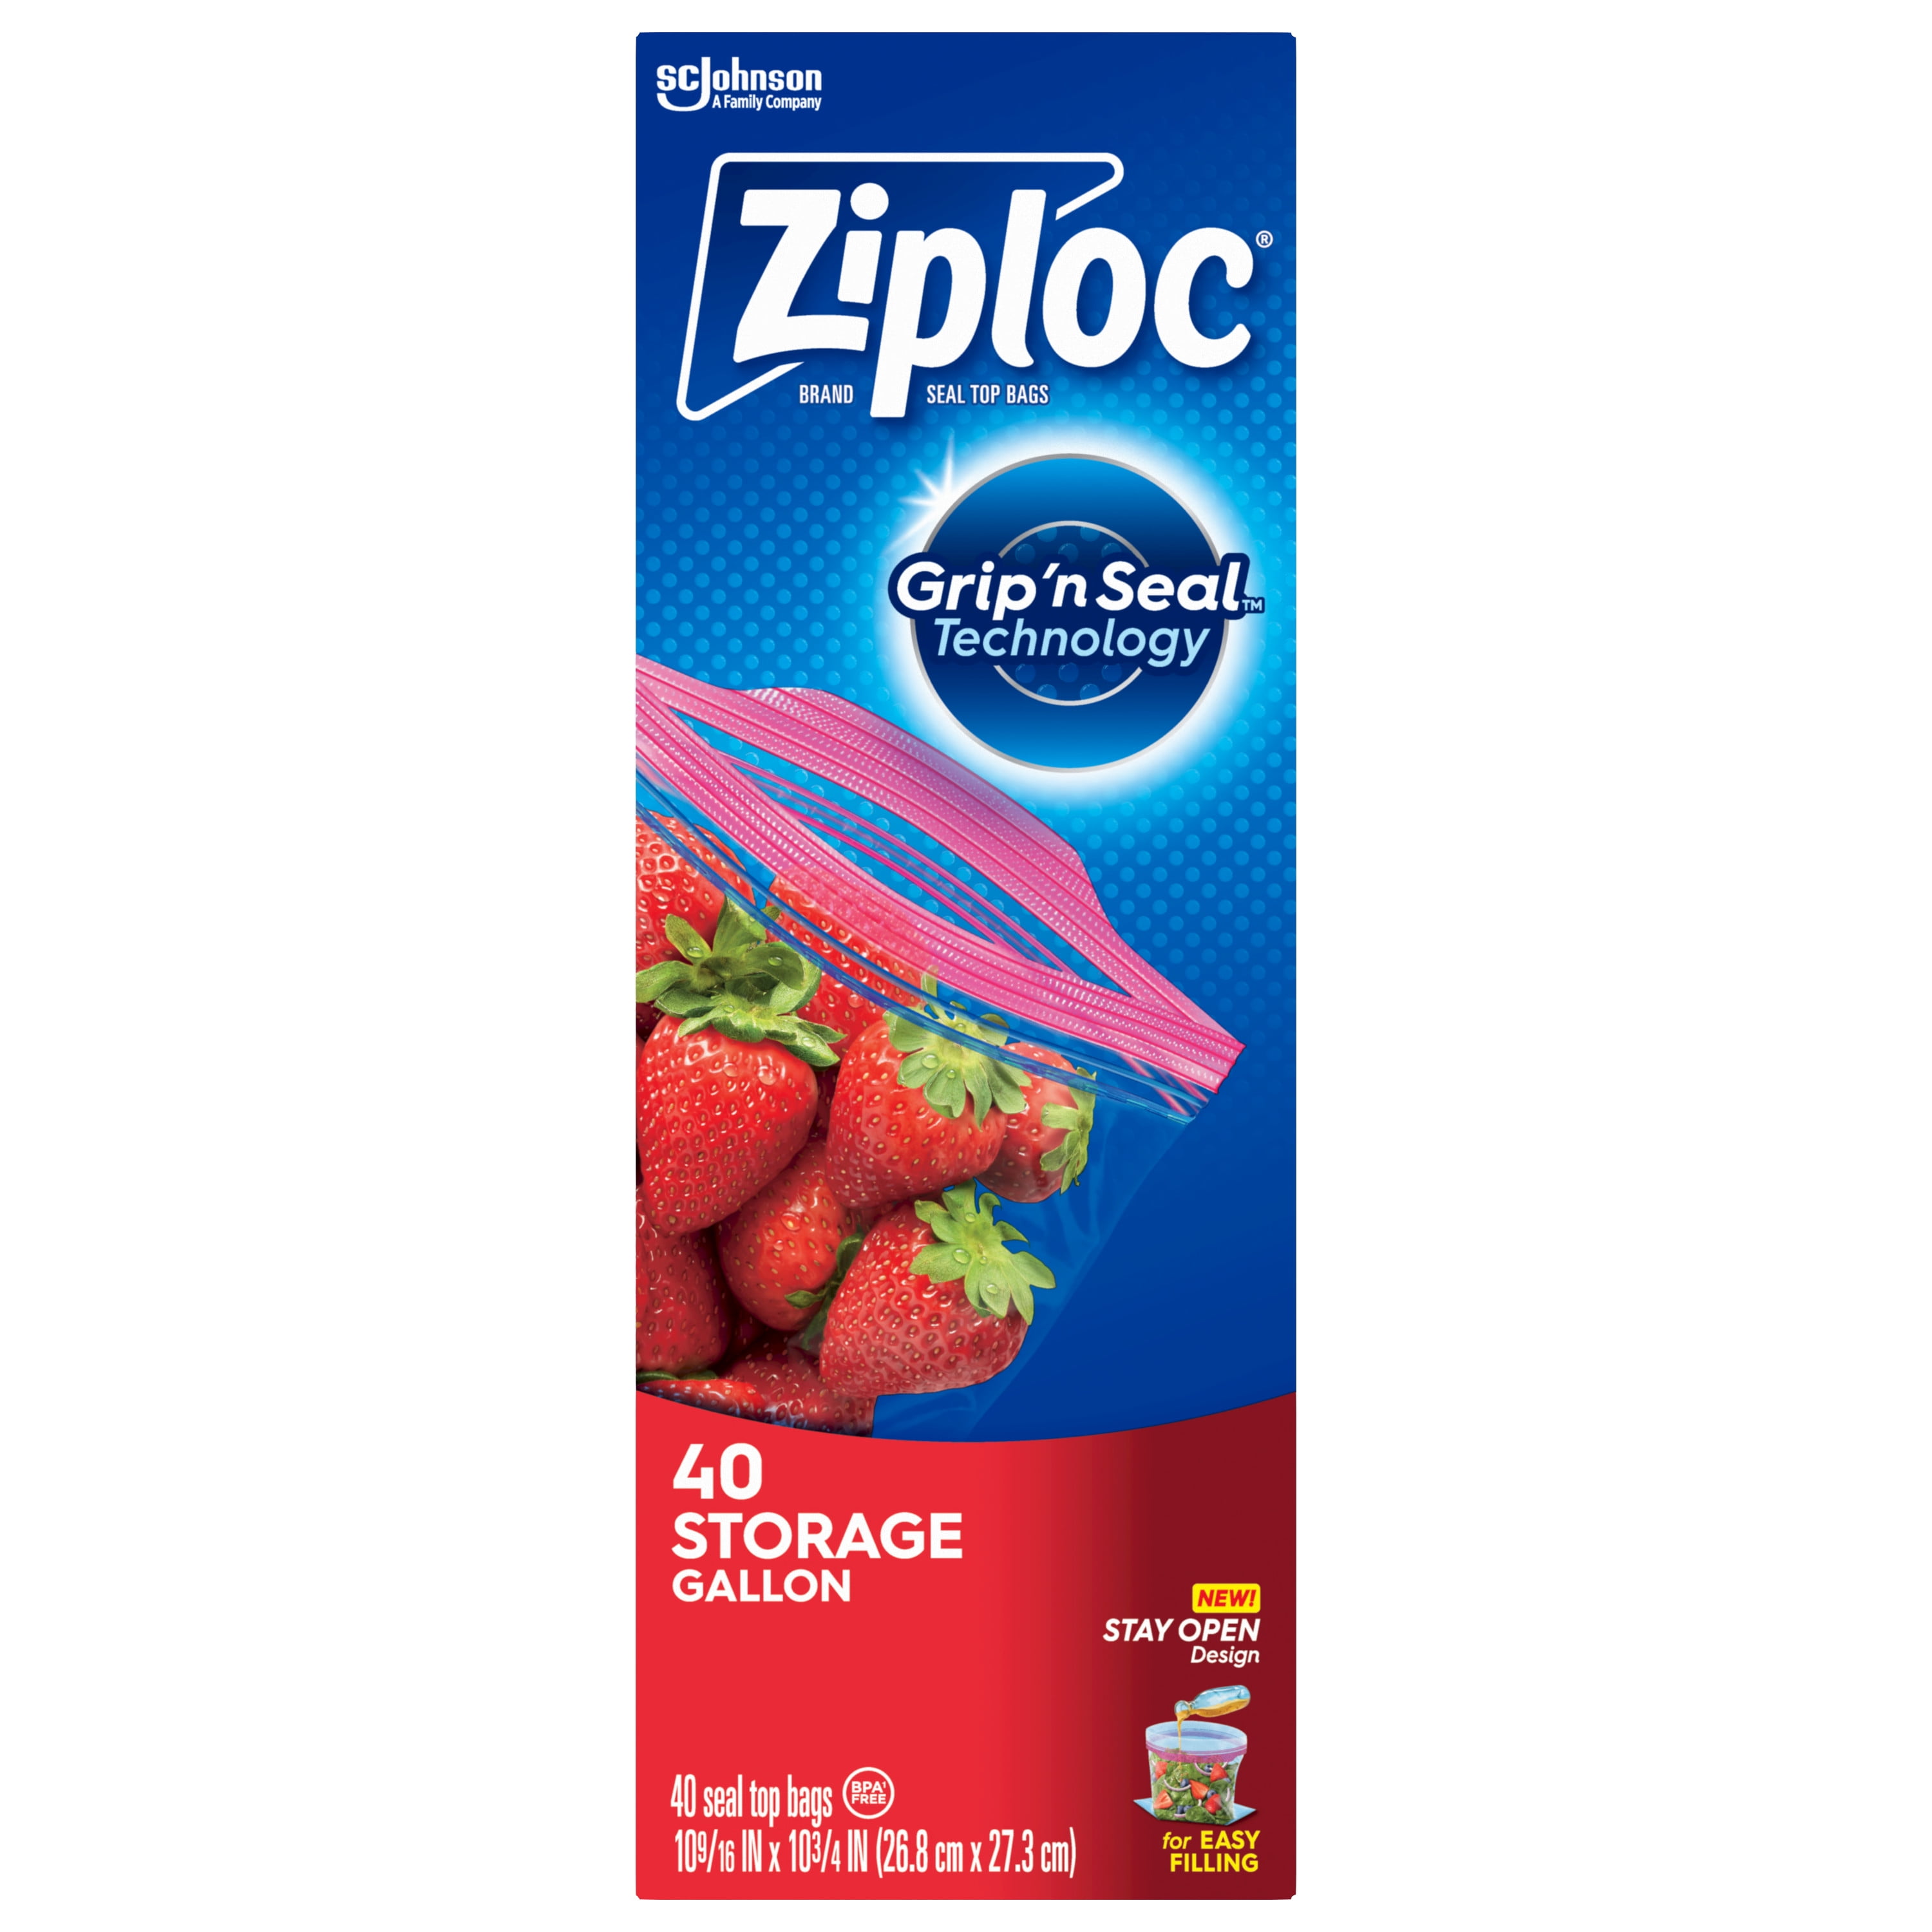 Ziploc Storage Gallon Bag, Stay Open Design, Grip 'n Seal Technology,  Reusable, 40 Count